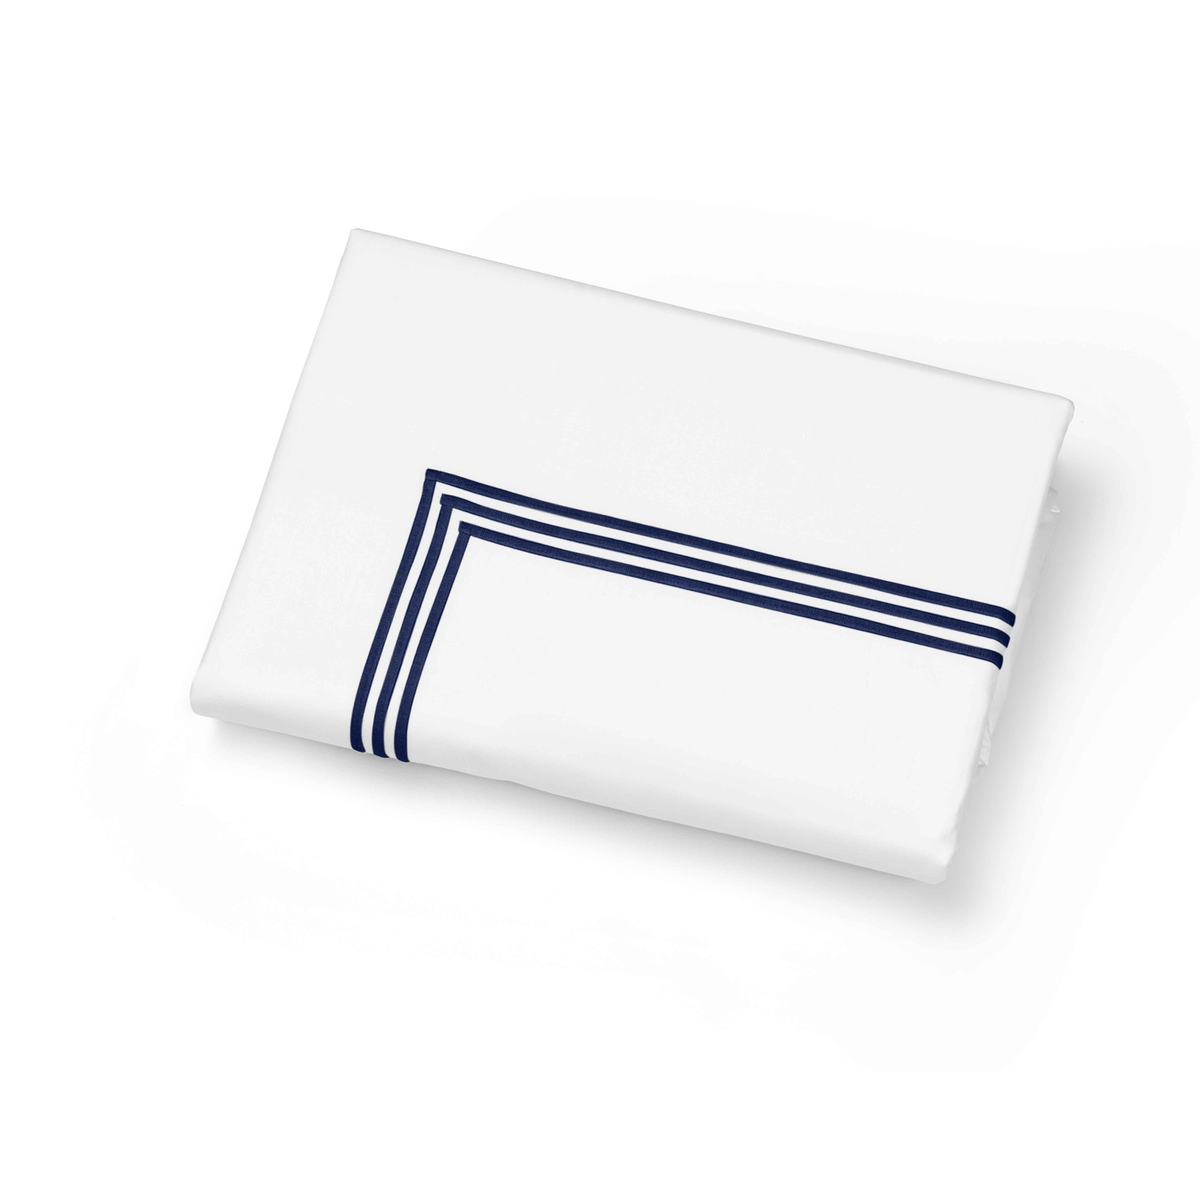 Folded Duvet Cover of Signoria Platinum Percale Bedding in White/Midnight Blue Color